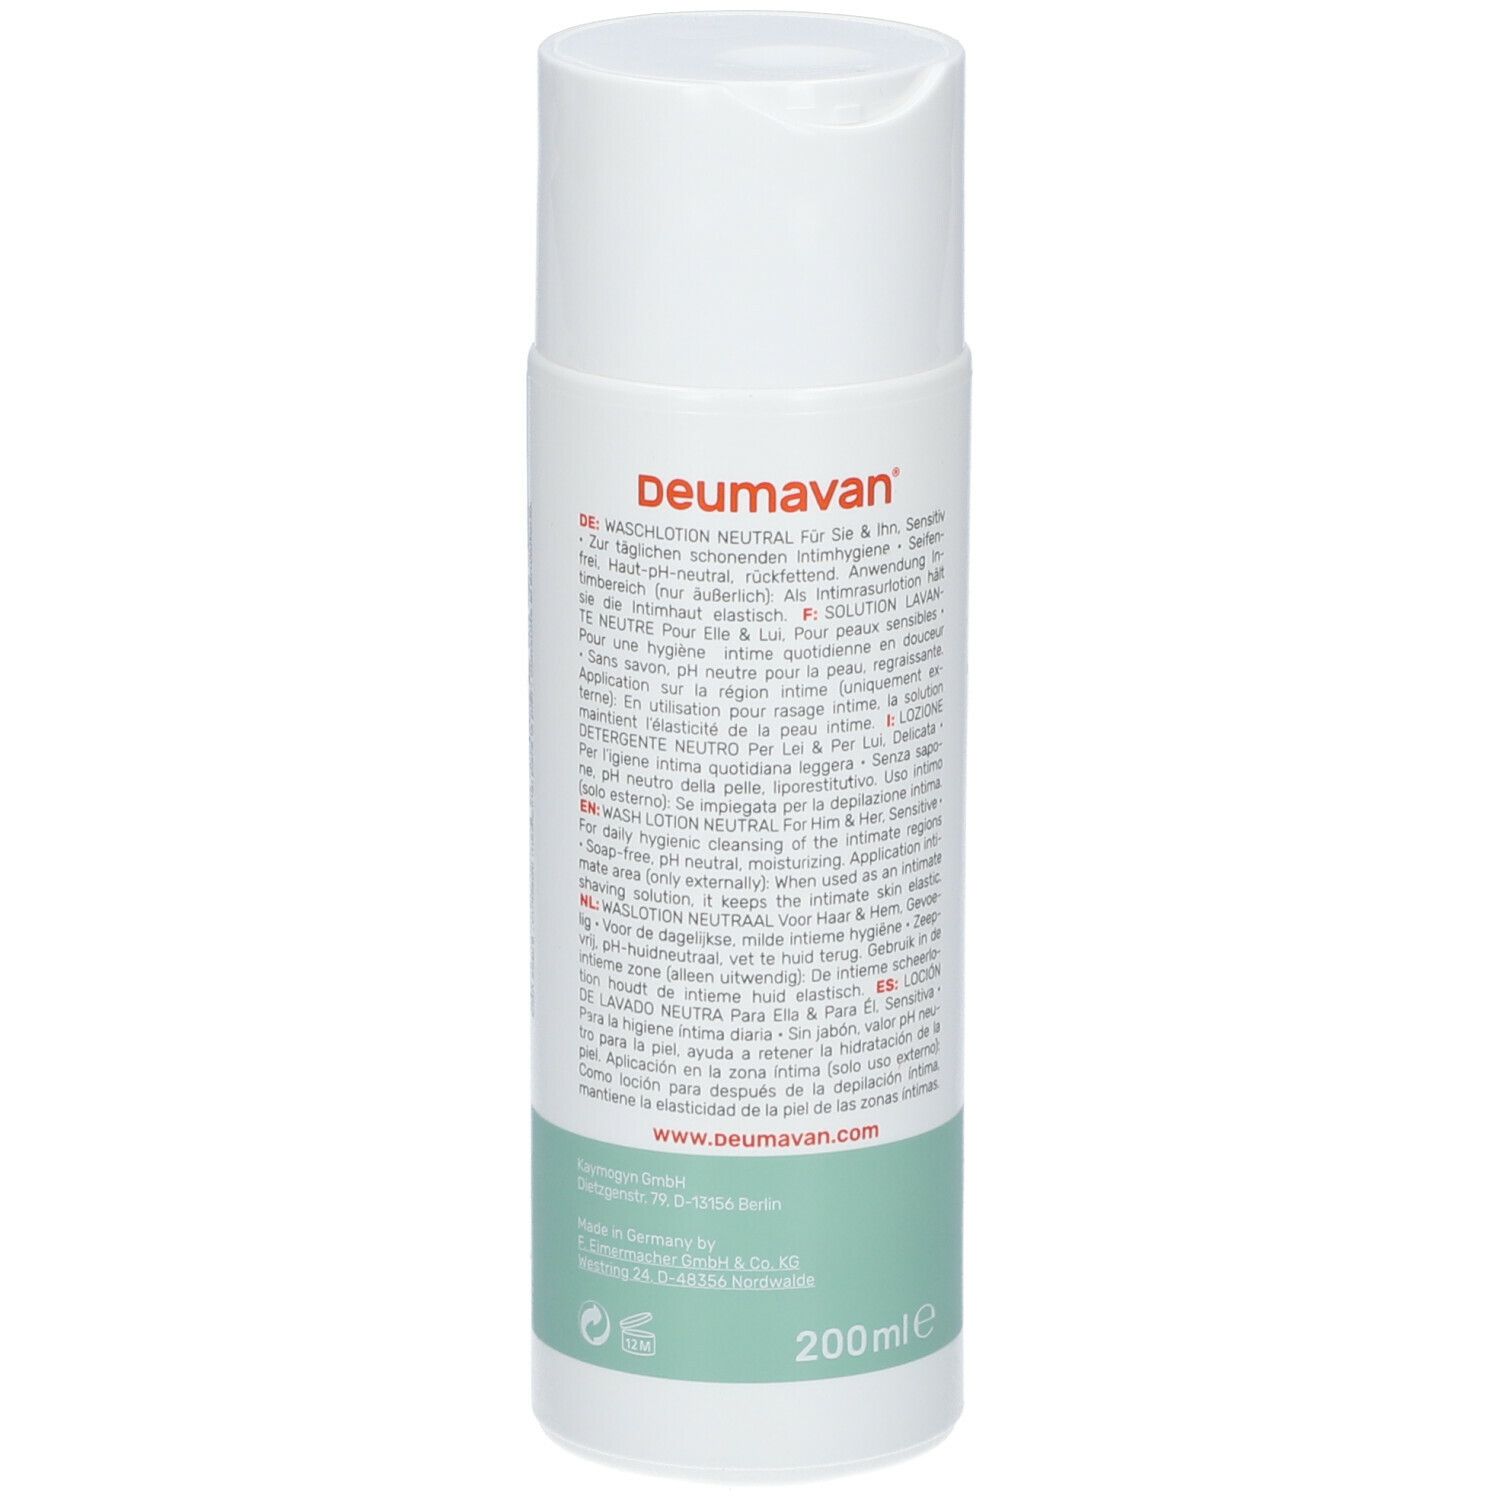 Deumavan® Waschlotion sensitiv neutral